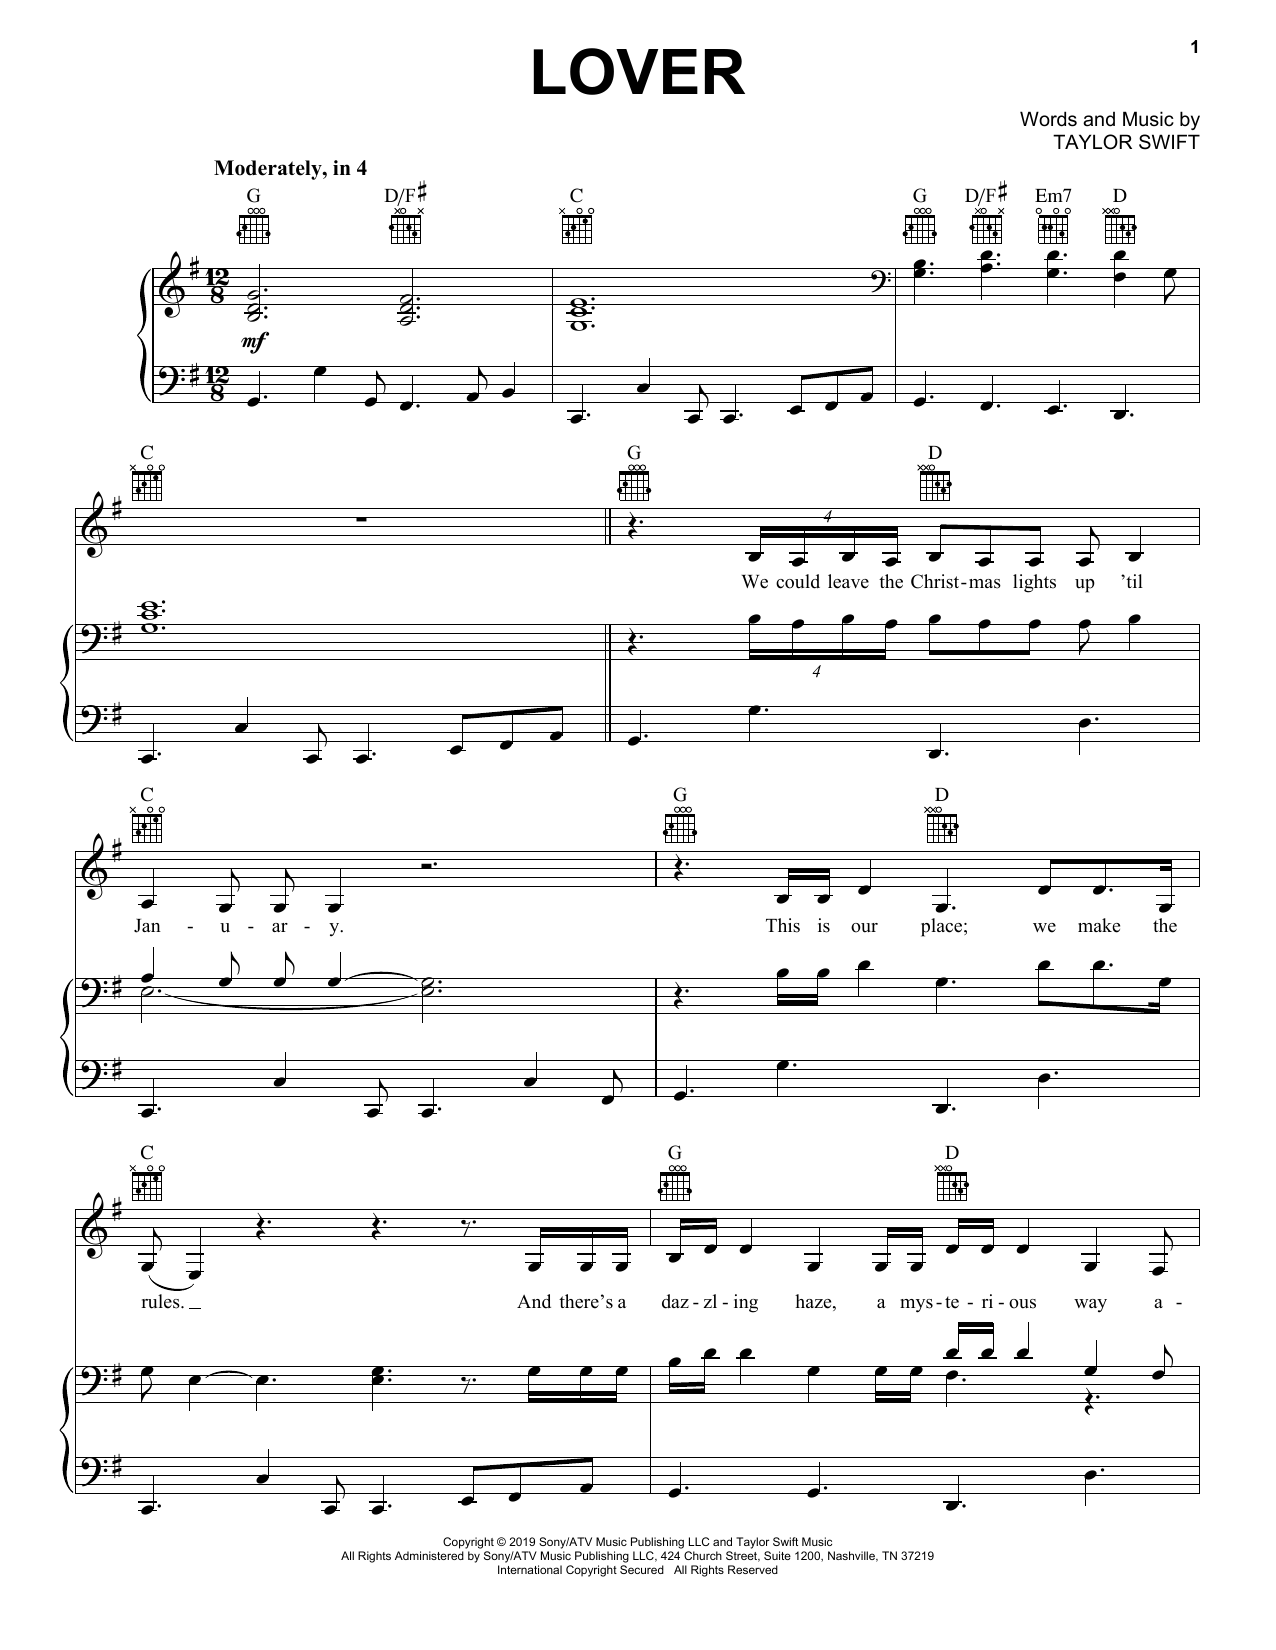 Taylor Swift Lover Sheet Music Notes & Chords for Ukulele - Download or Print PDF